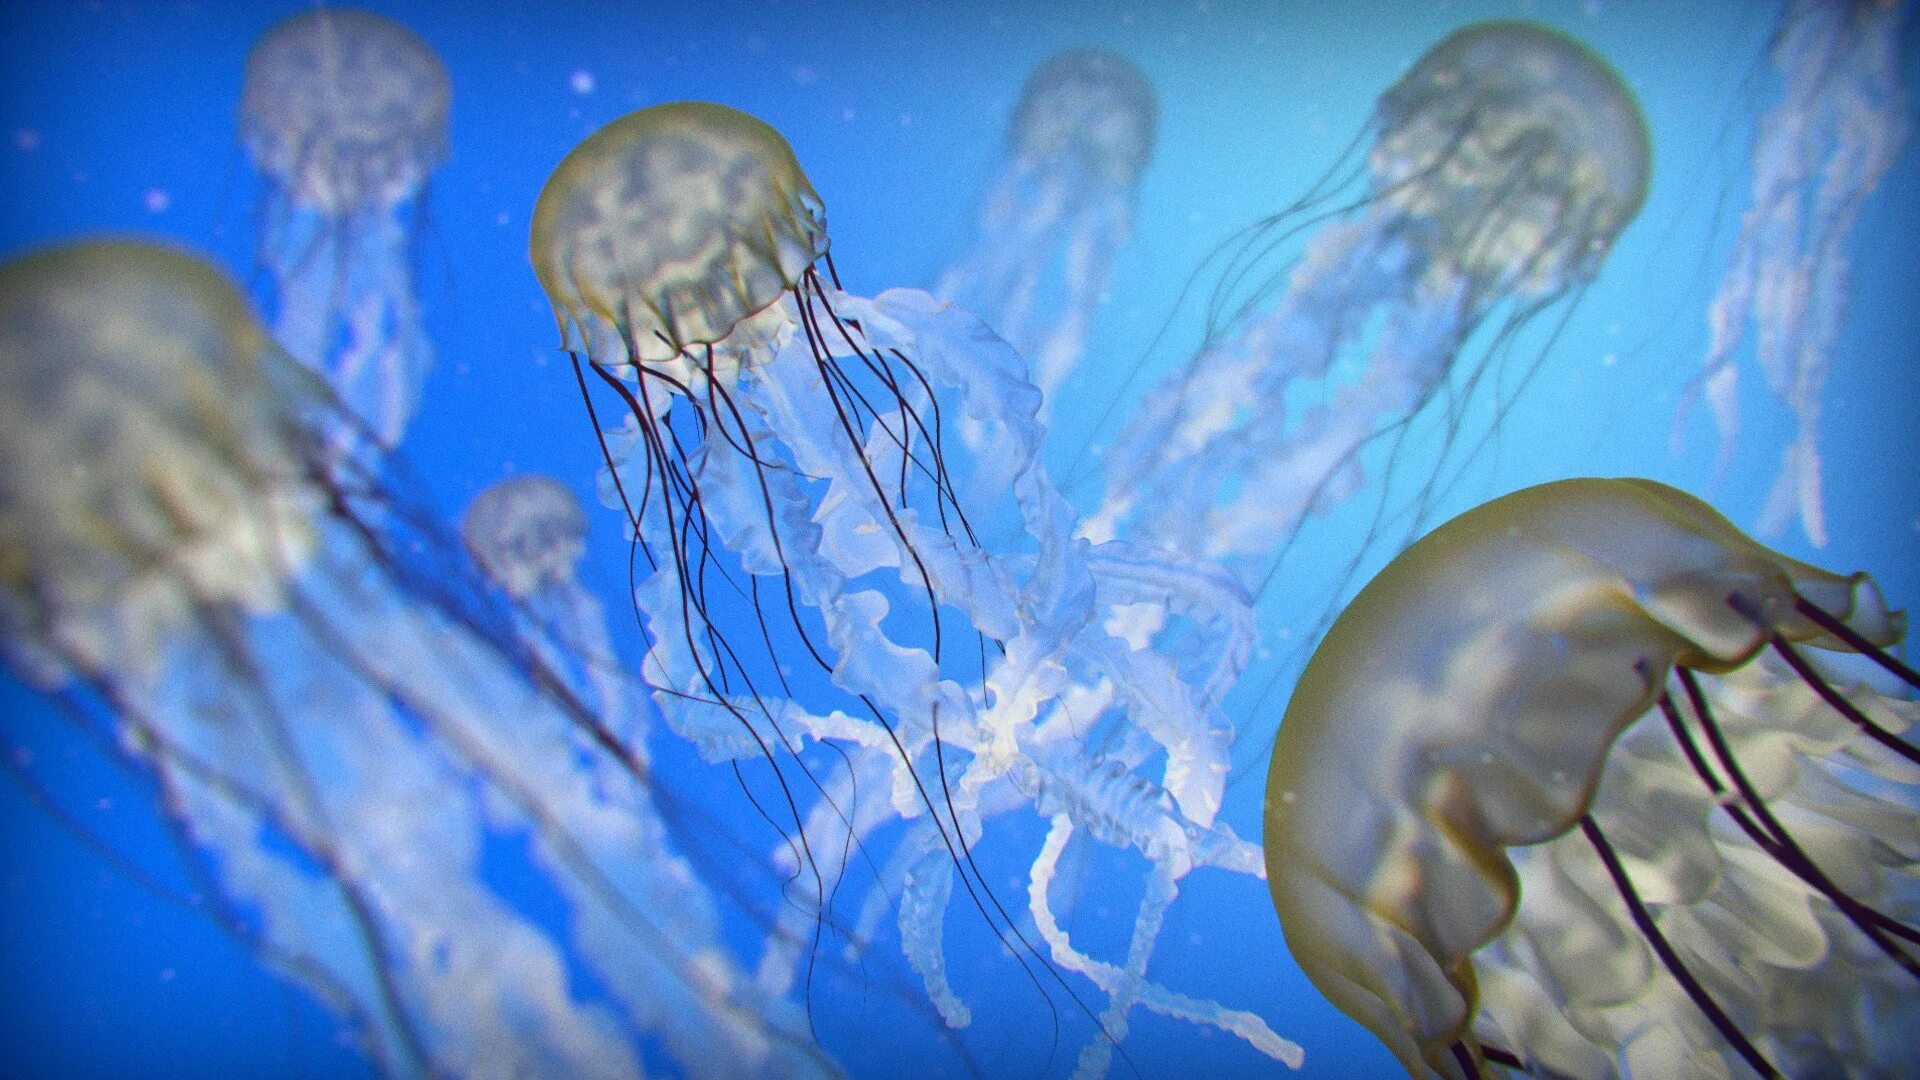 Медуза cyanea lamarckii. Медуза: Воскрешение медузы. Scyphozoa Сцифоидные медузы. Медуза Туритопсис нутрикула. Море живое существо